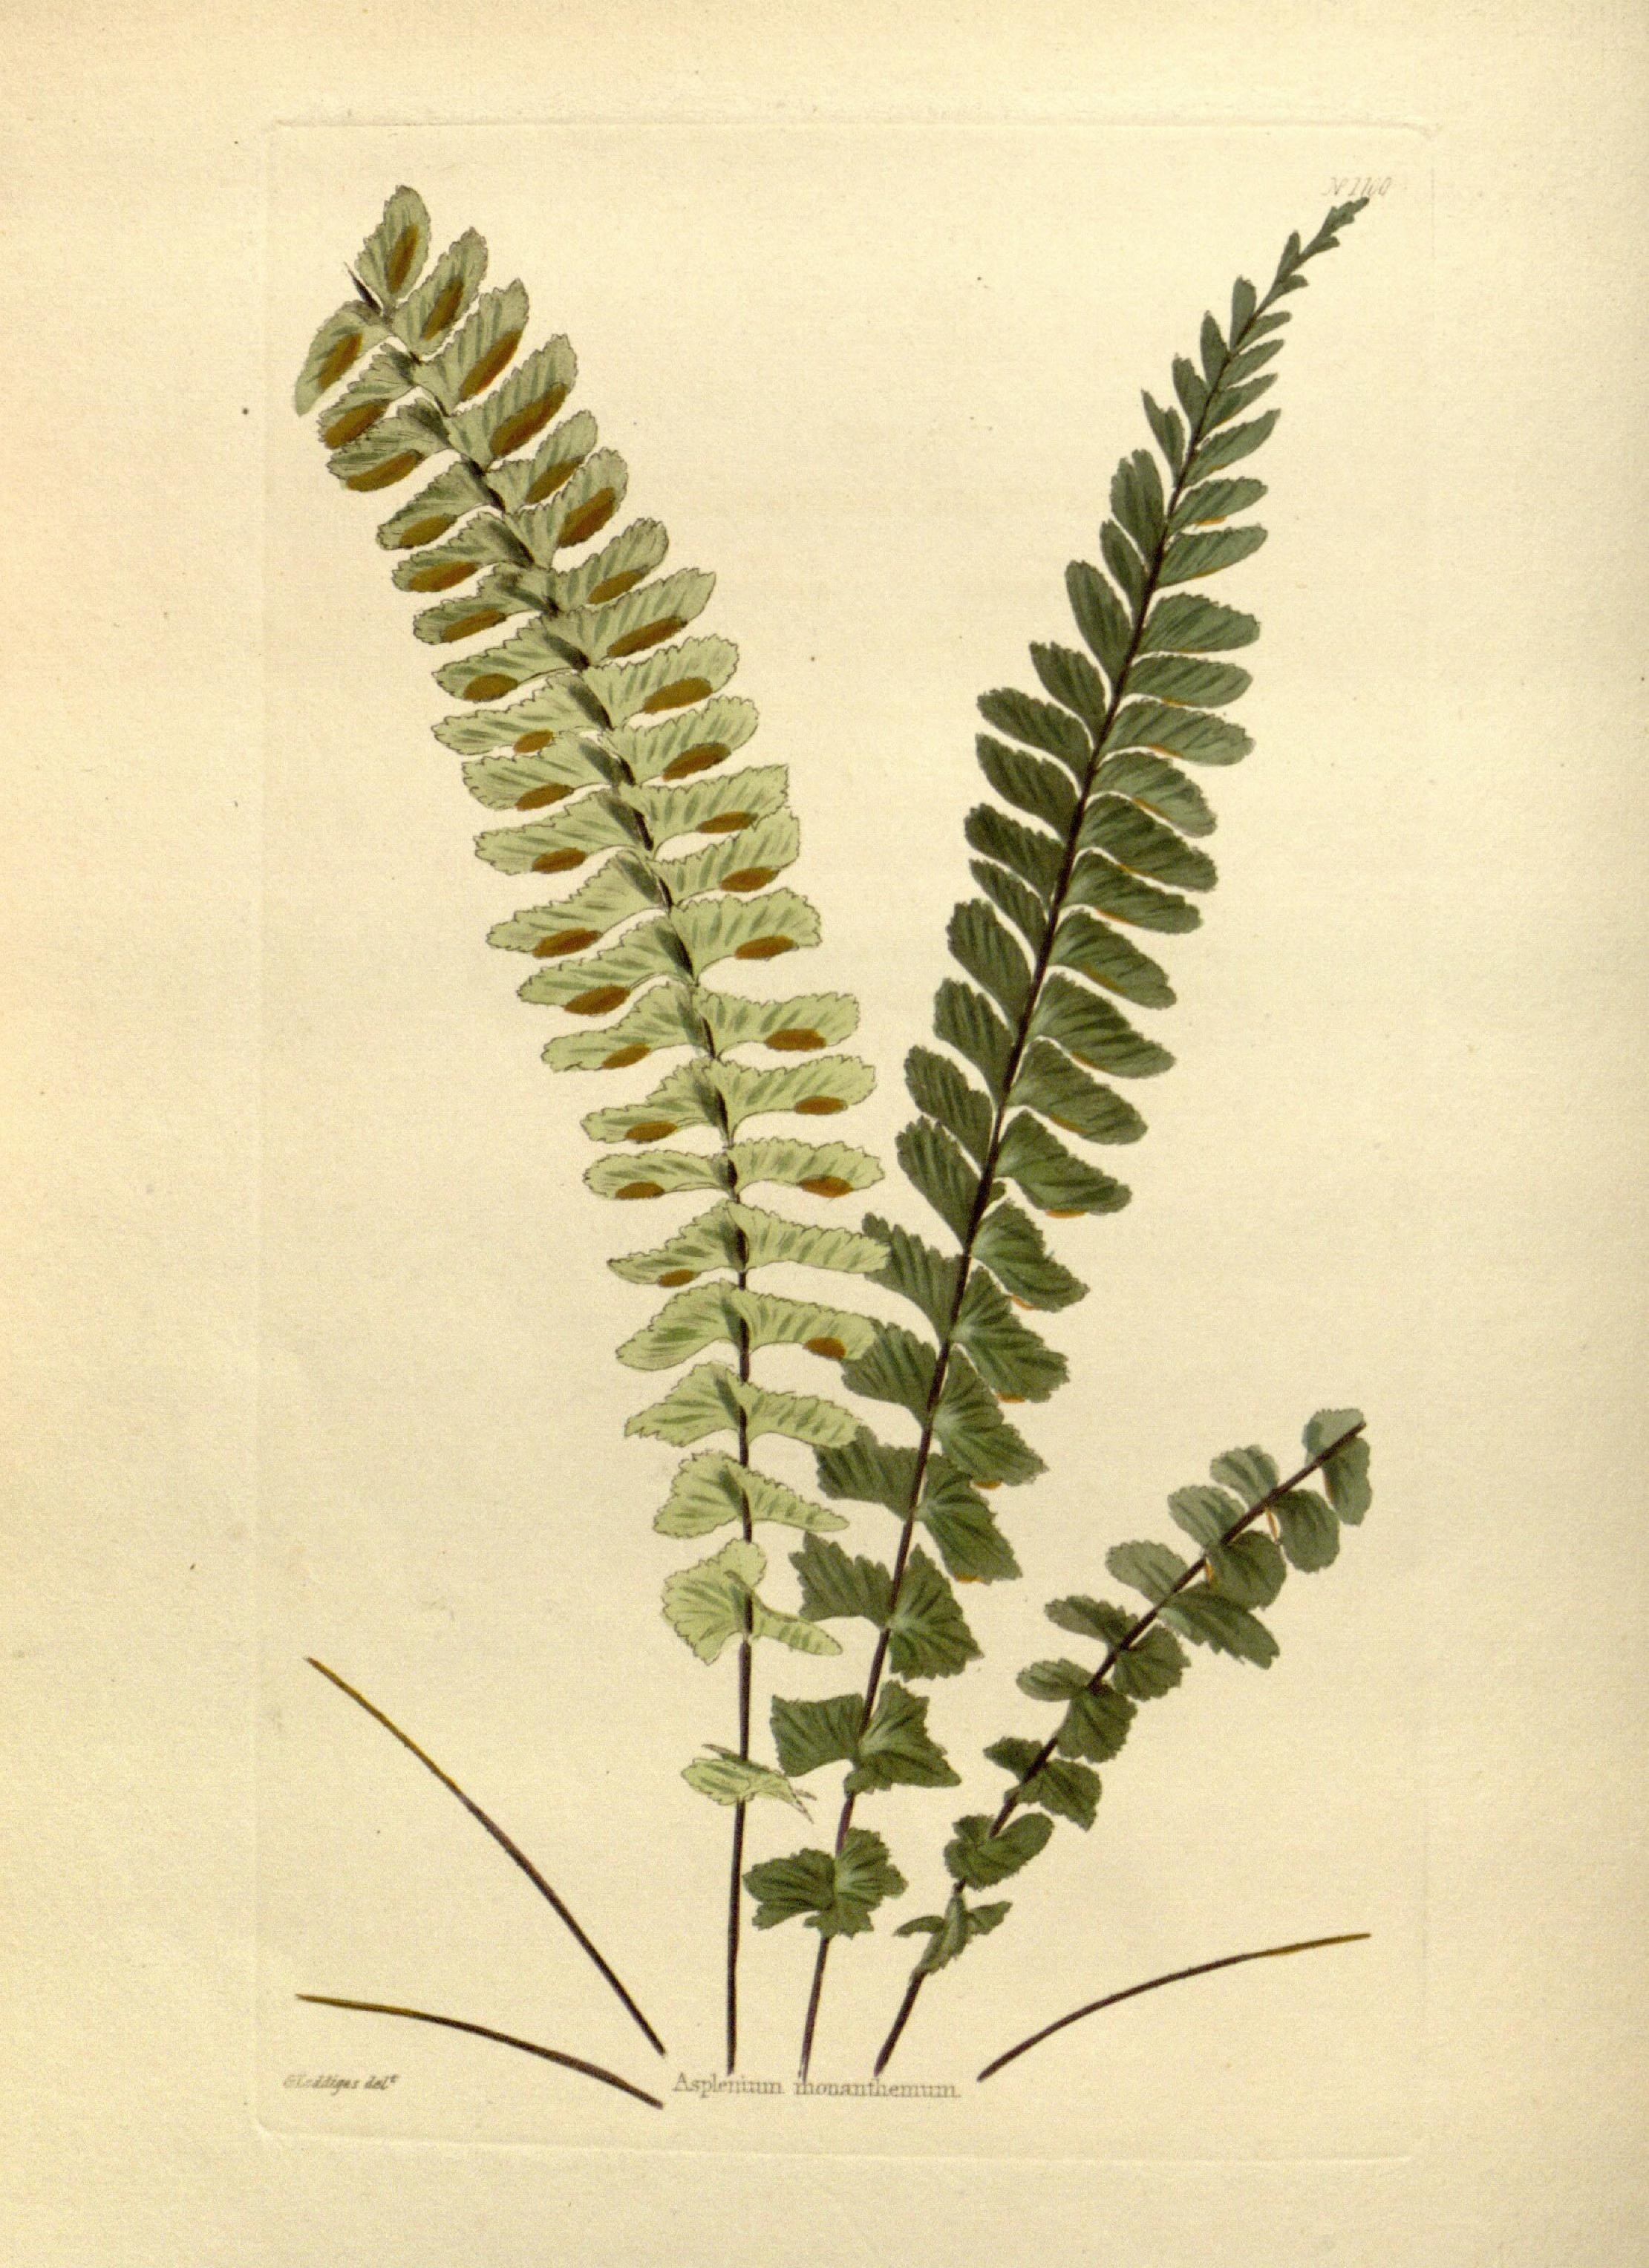 Asplenium monanthes (rights holder: Biodiversity Heritage Library)